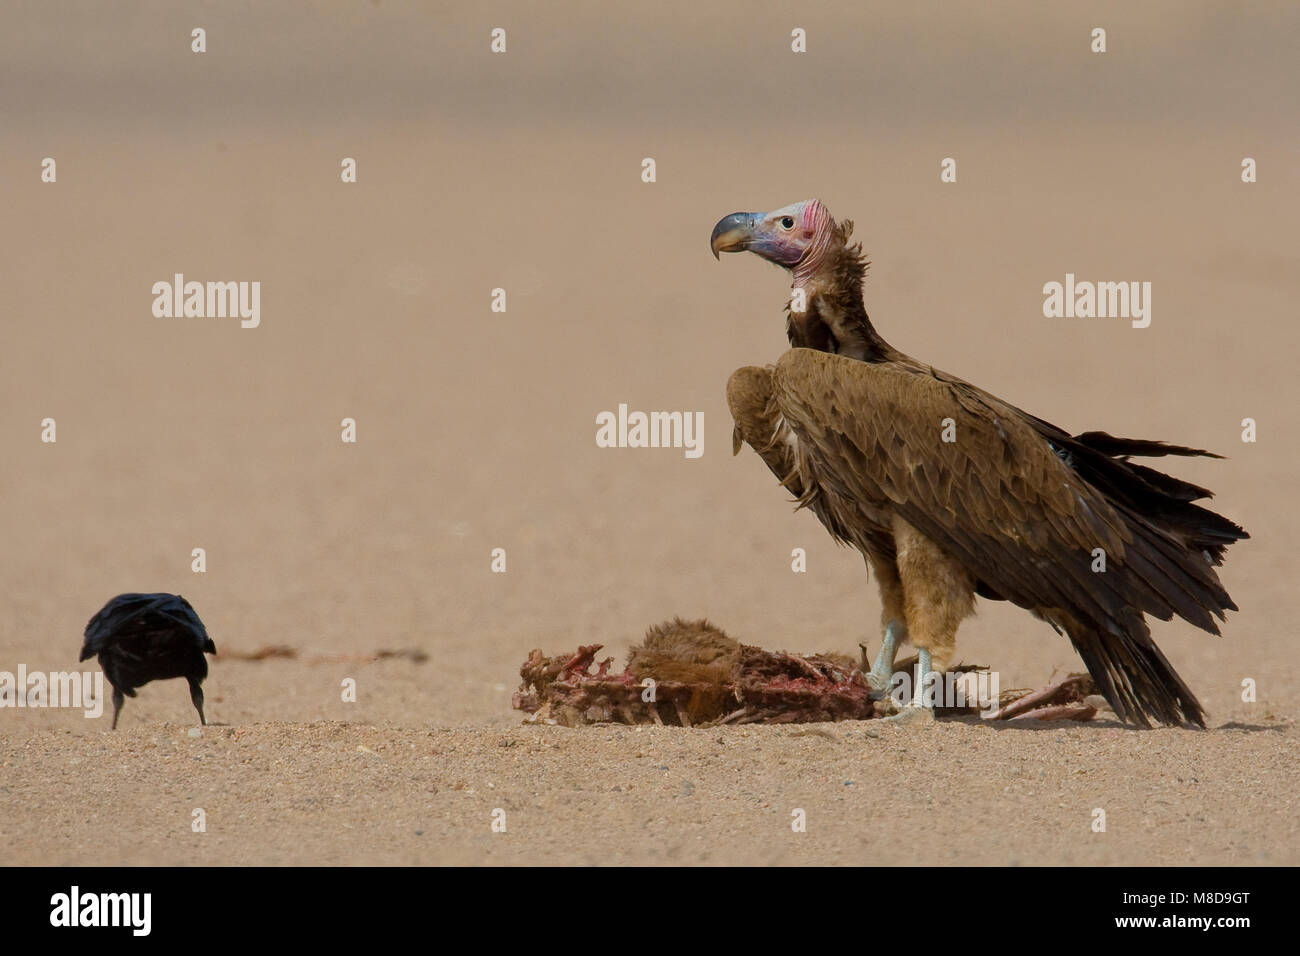 Volwassen Oorgier etend van kadaver; Adult Lappet-faced Vulture eating from dead animal Stock Photo